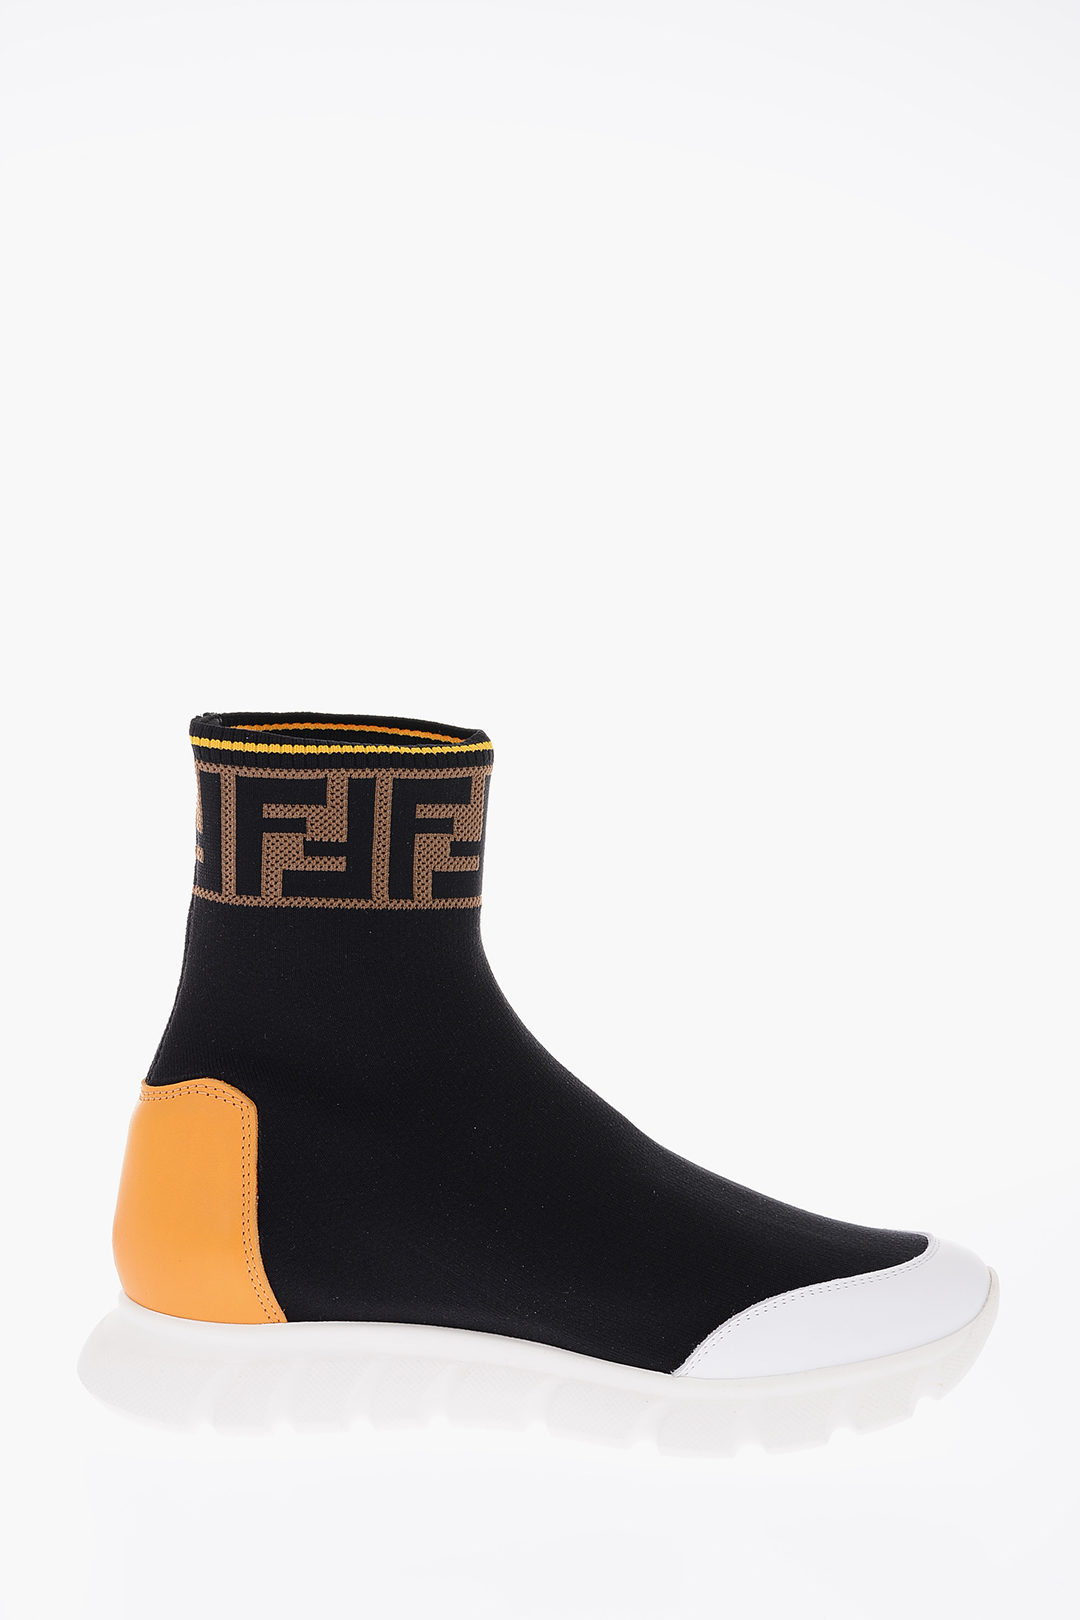 Fendi Men's Fendi Mania Zip-Front Sock Sneakers | Neiman Marcus